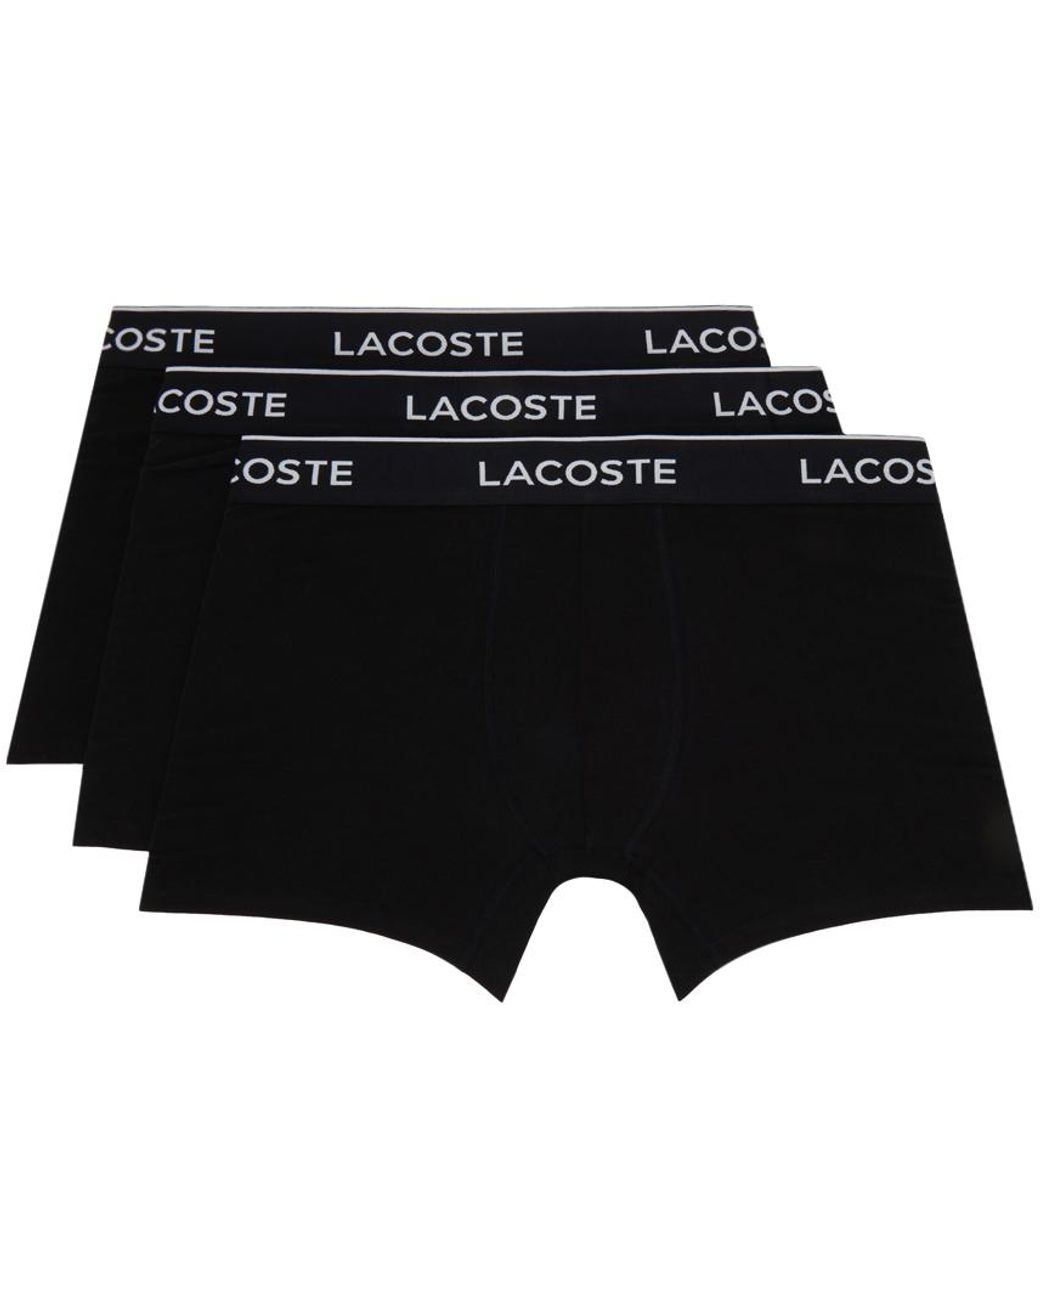 Lacoste Three-pack Black Boxer Briefs for Men